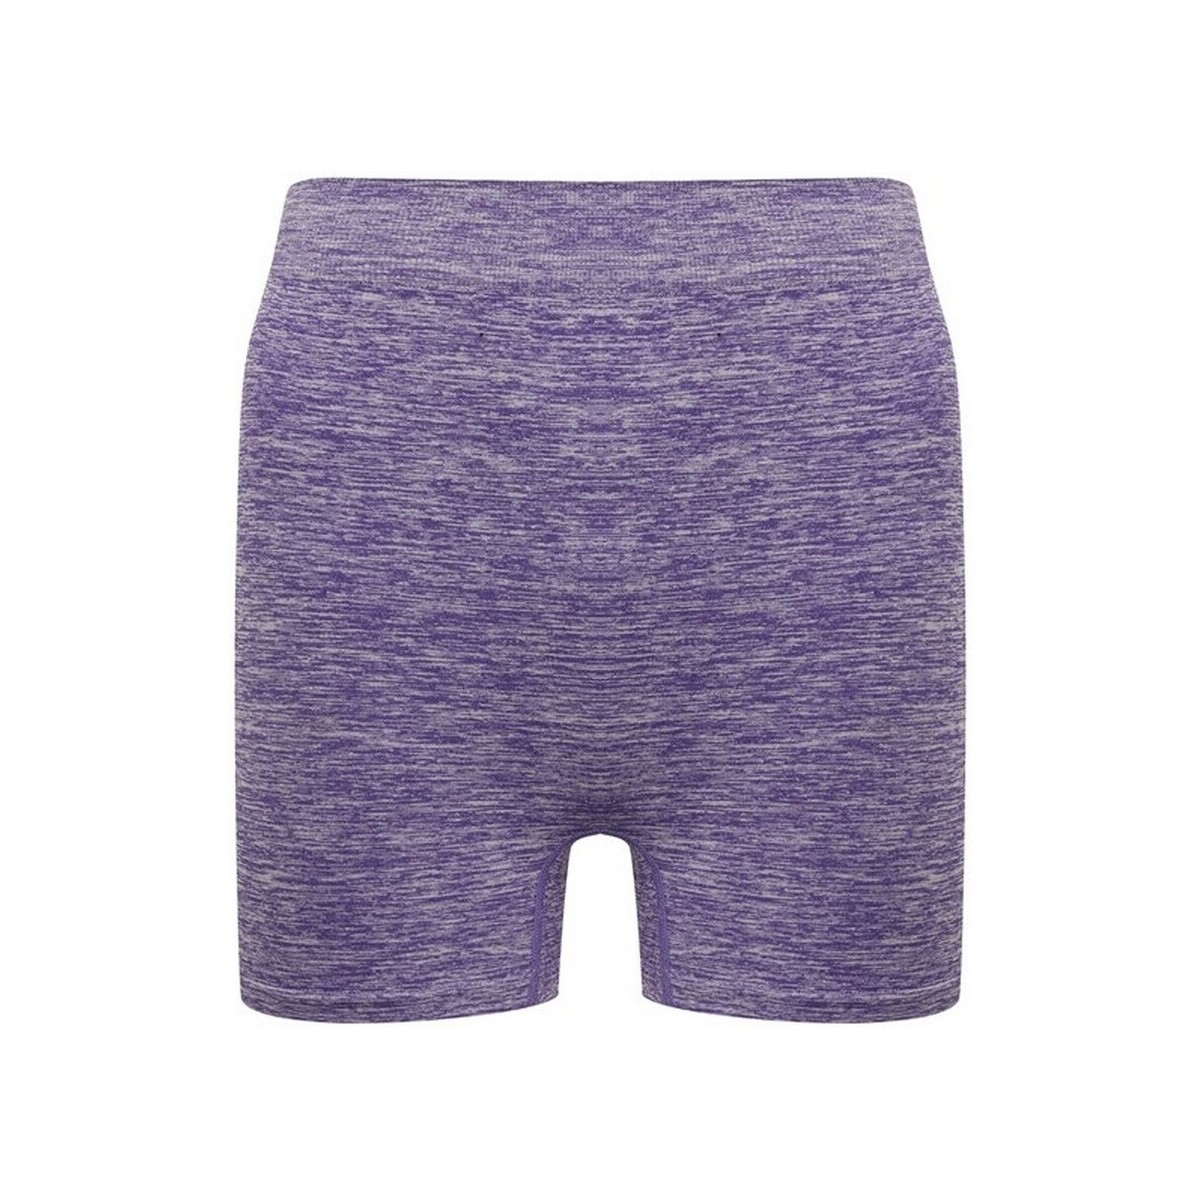 Vêtements Femme Shorts / Bermudas Tombo TL301 Violet